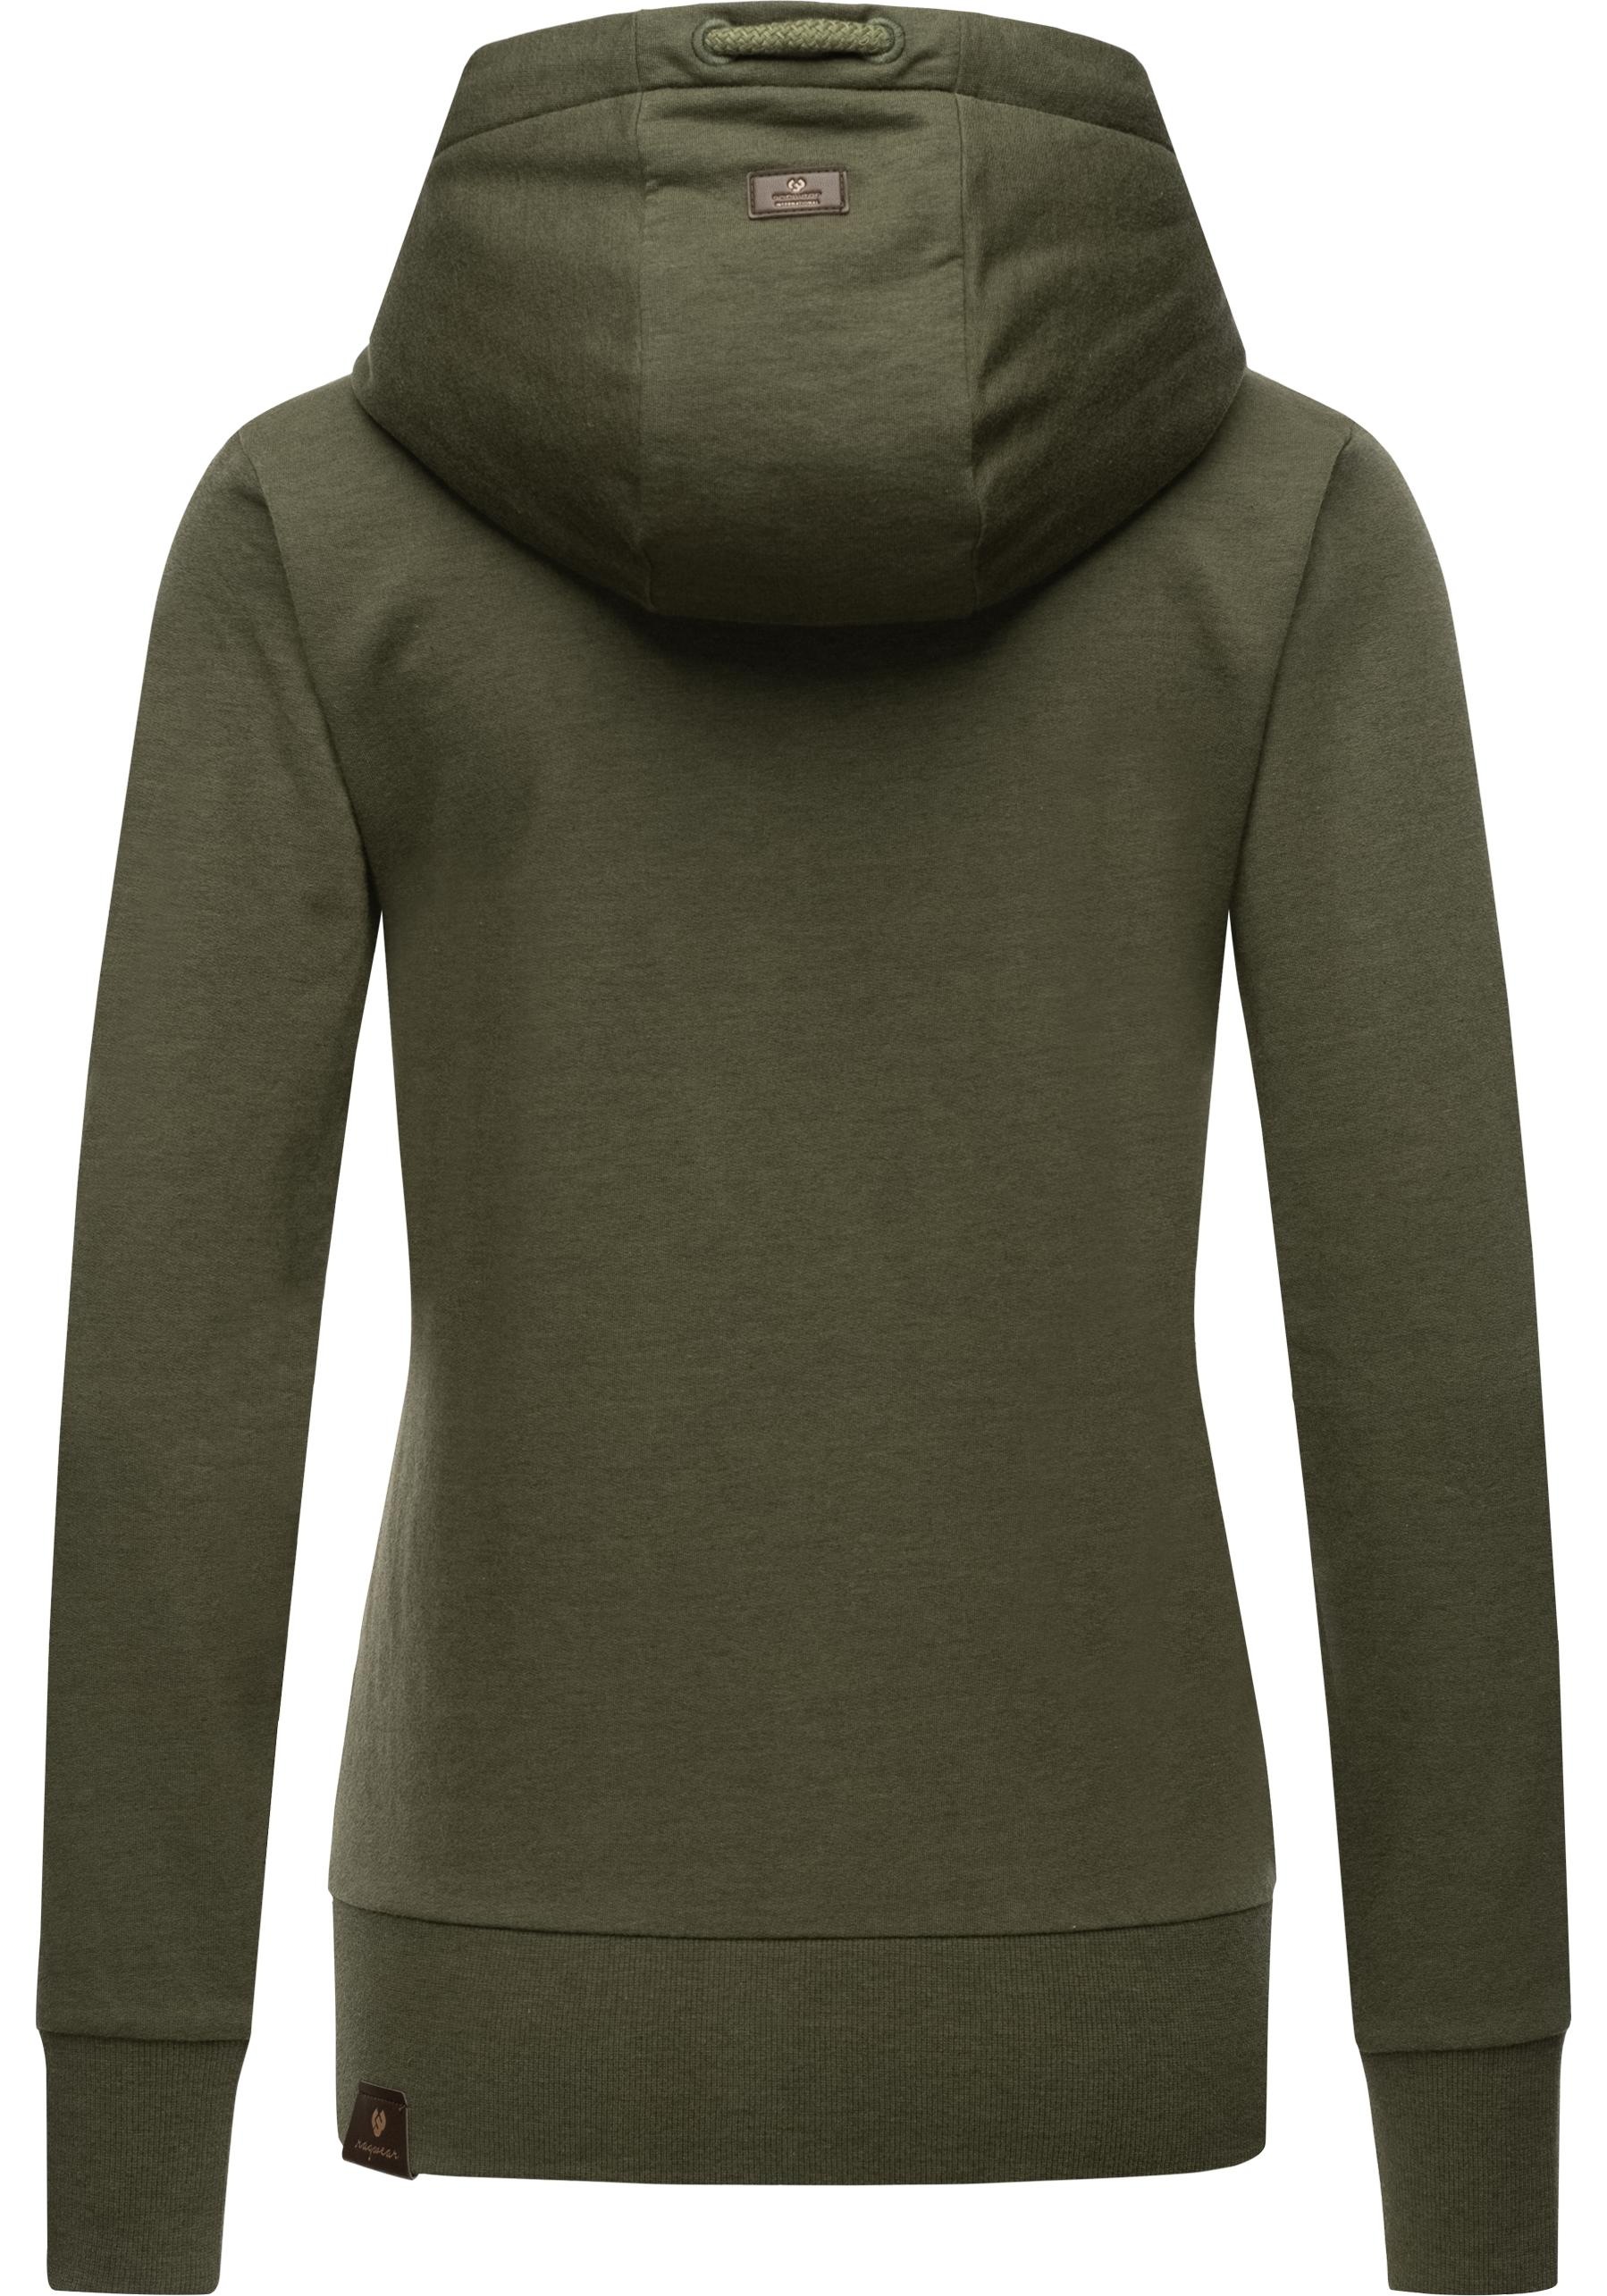 »Paya mit Kapuzenpullover sportlicher online Ragwear Kordeln Intl.«, Damen Kapuzensweater